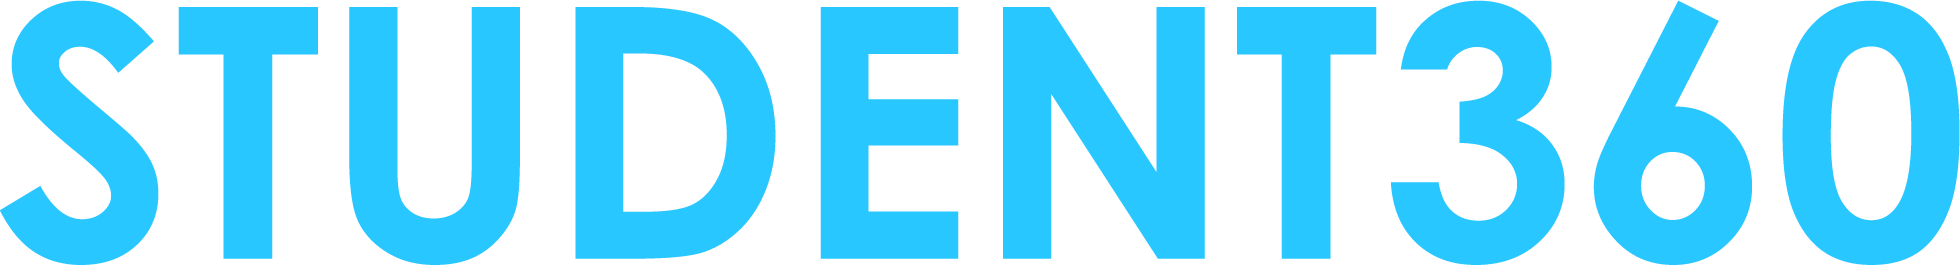 Student360 Logo